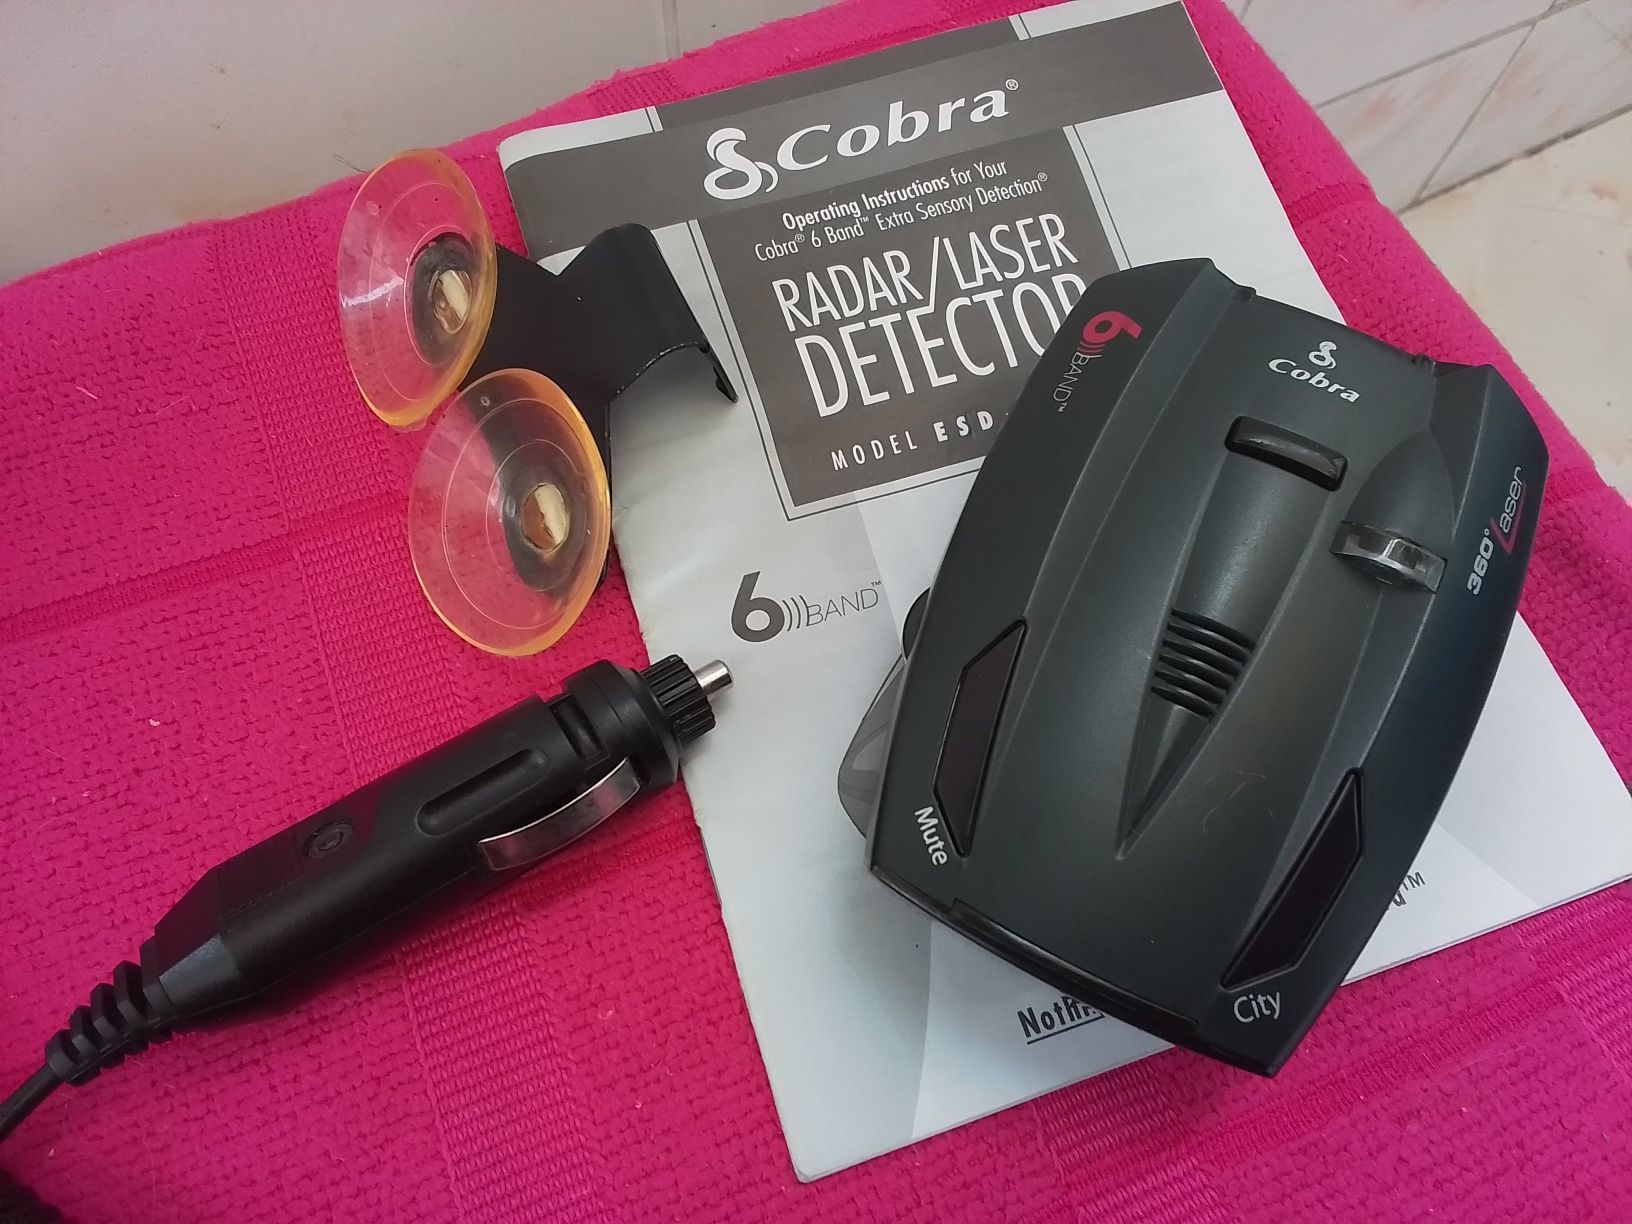 Detector radar Cobra